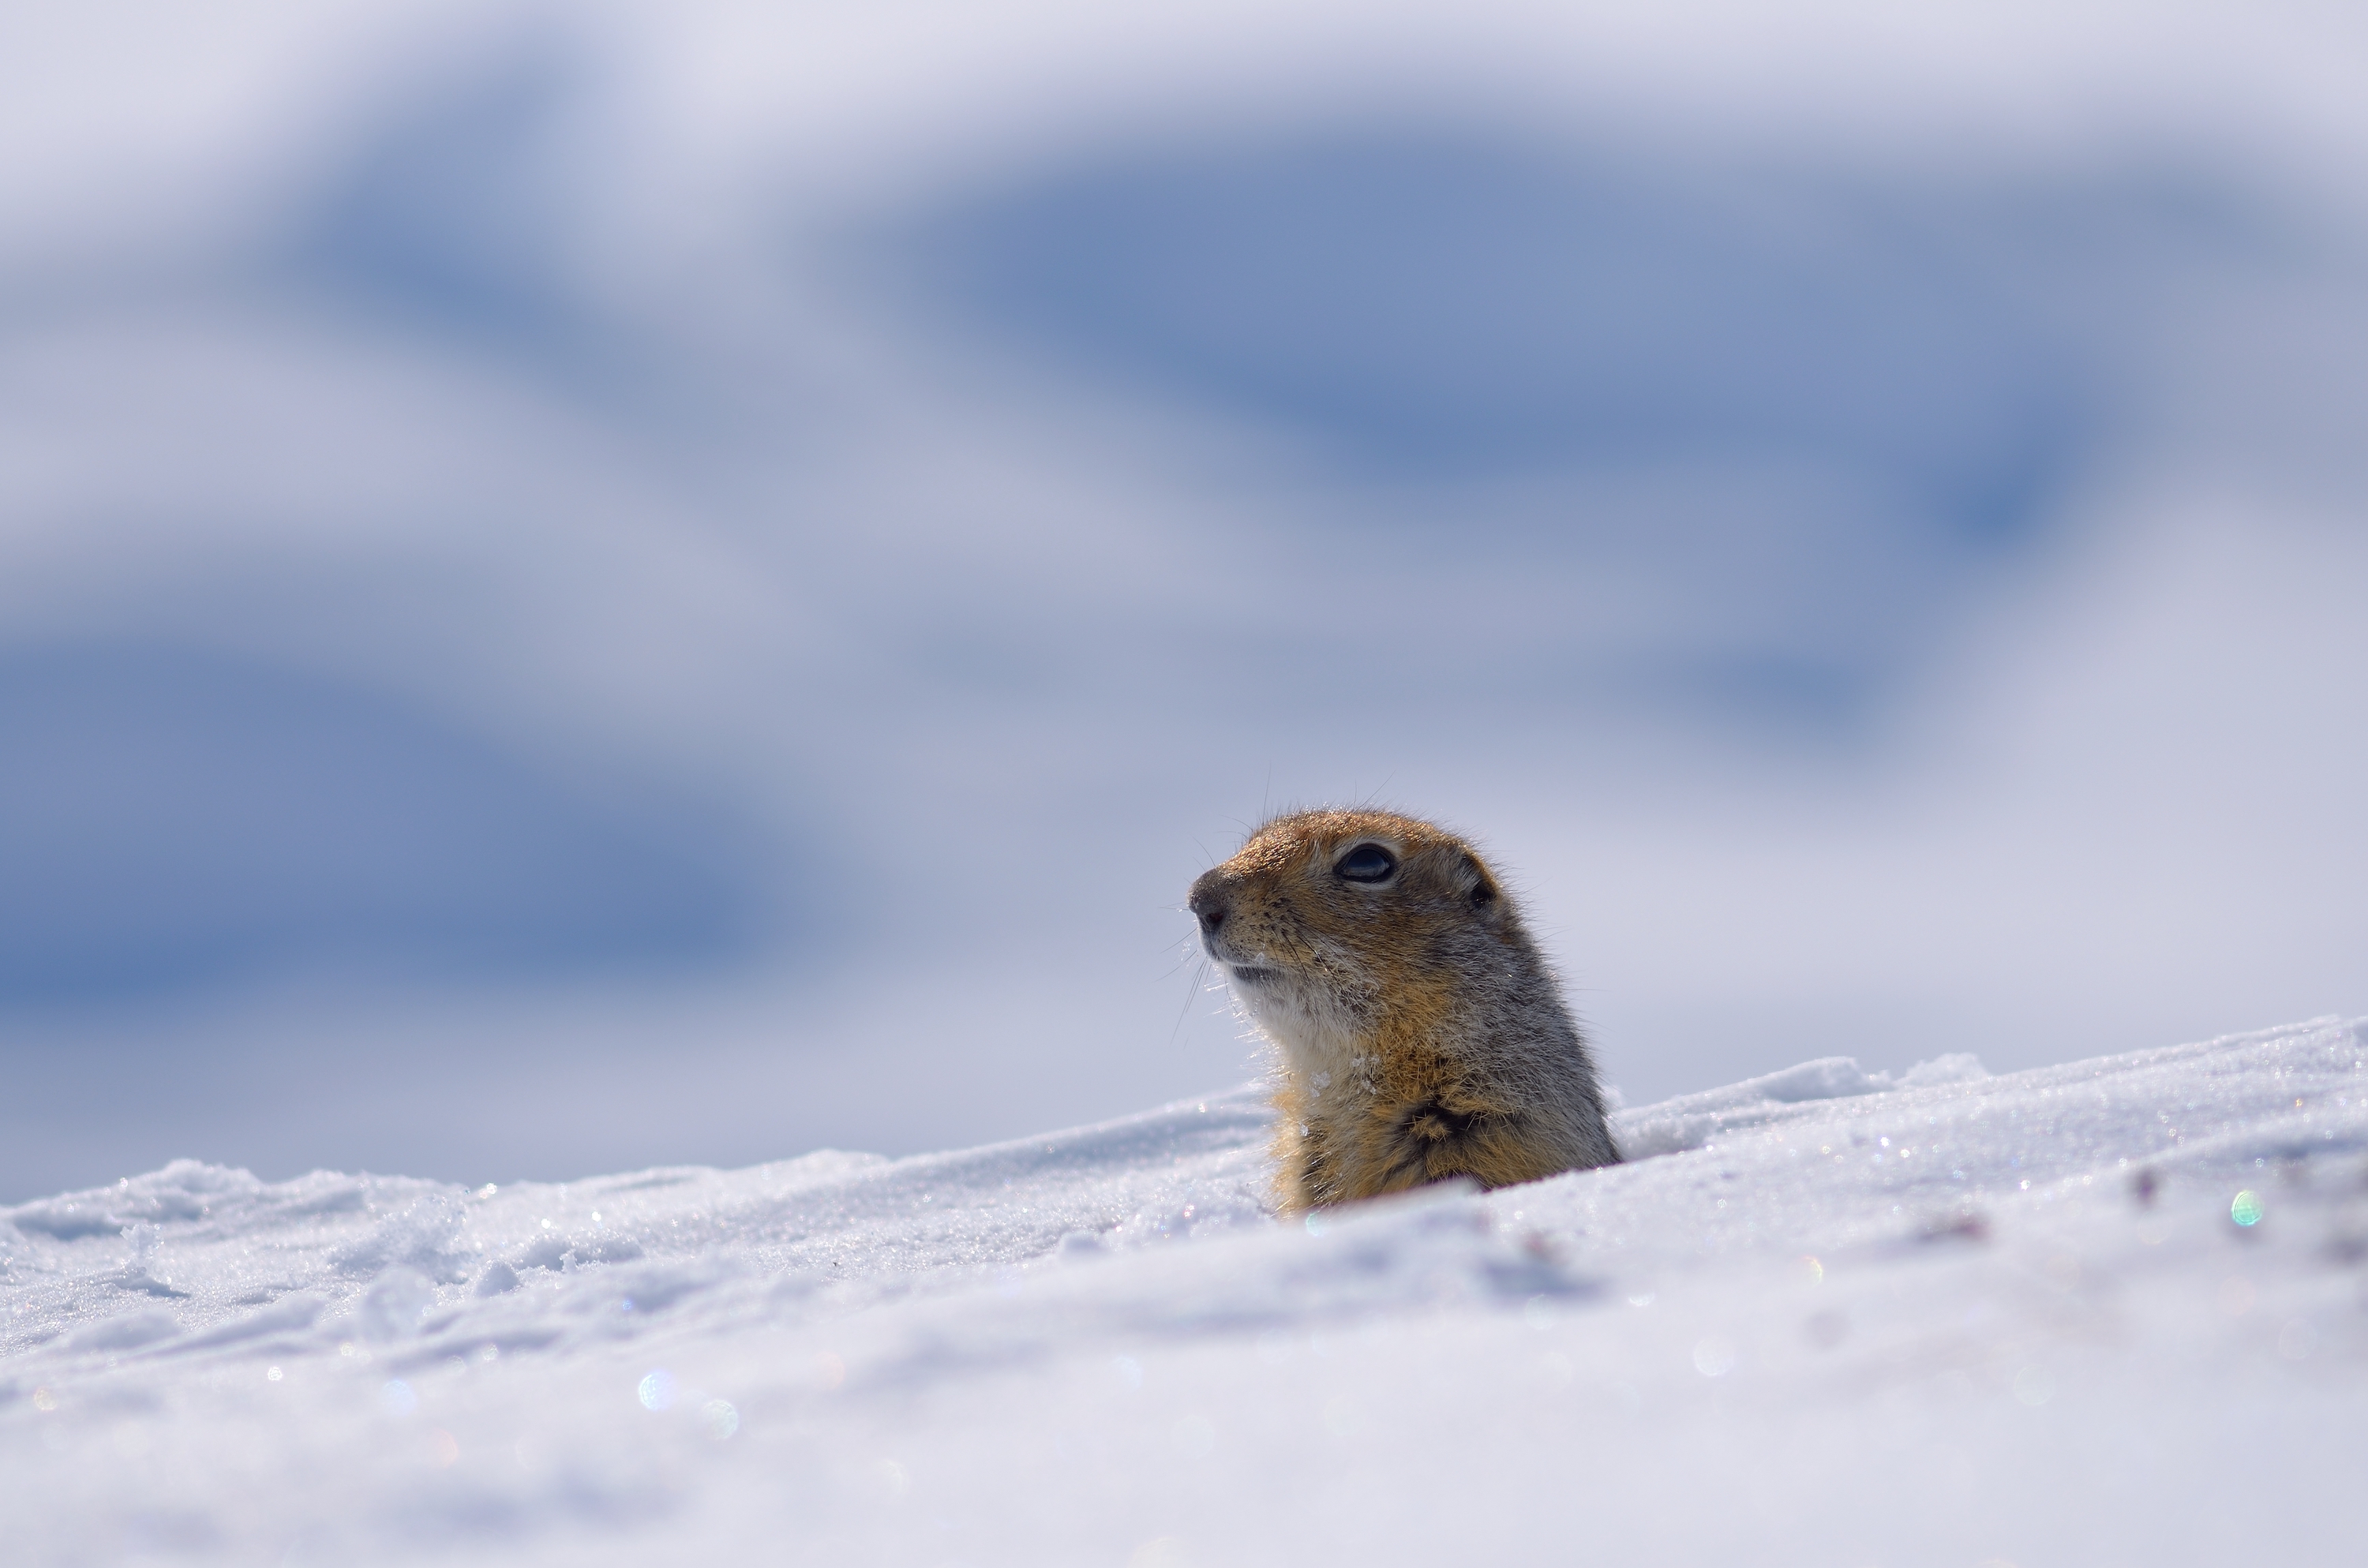 An arctic ground squirrel raises its head above snow.